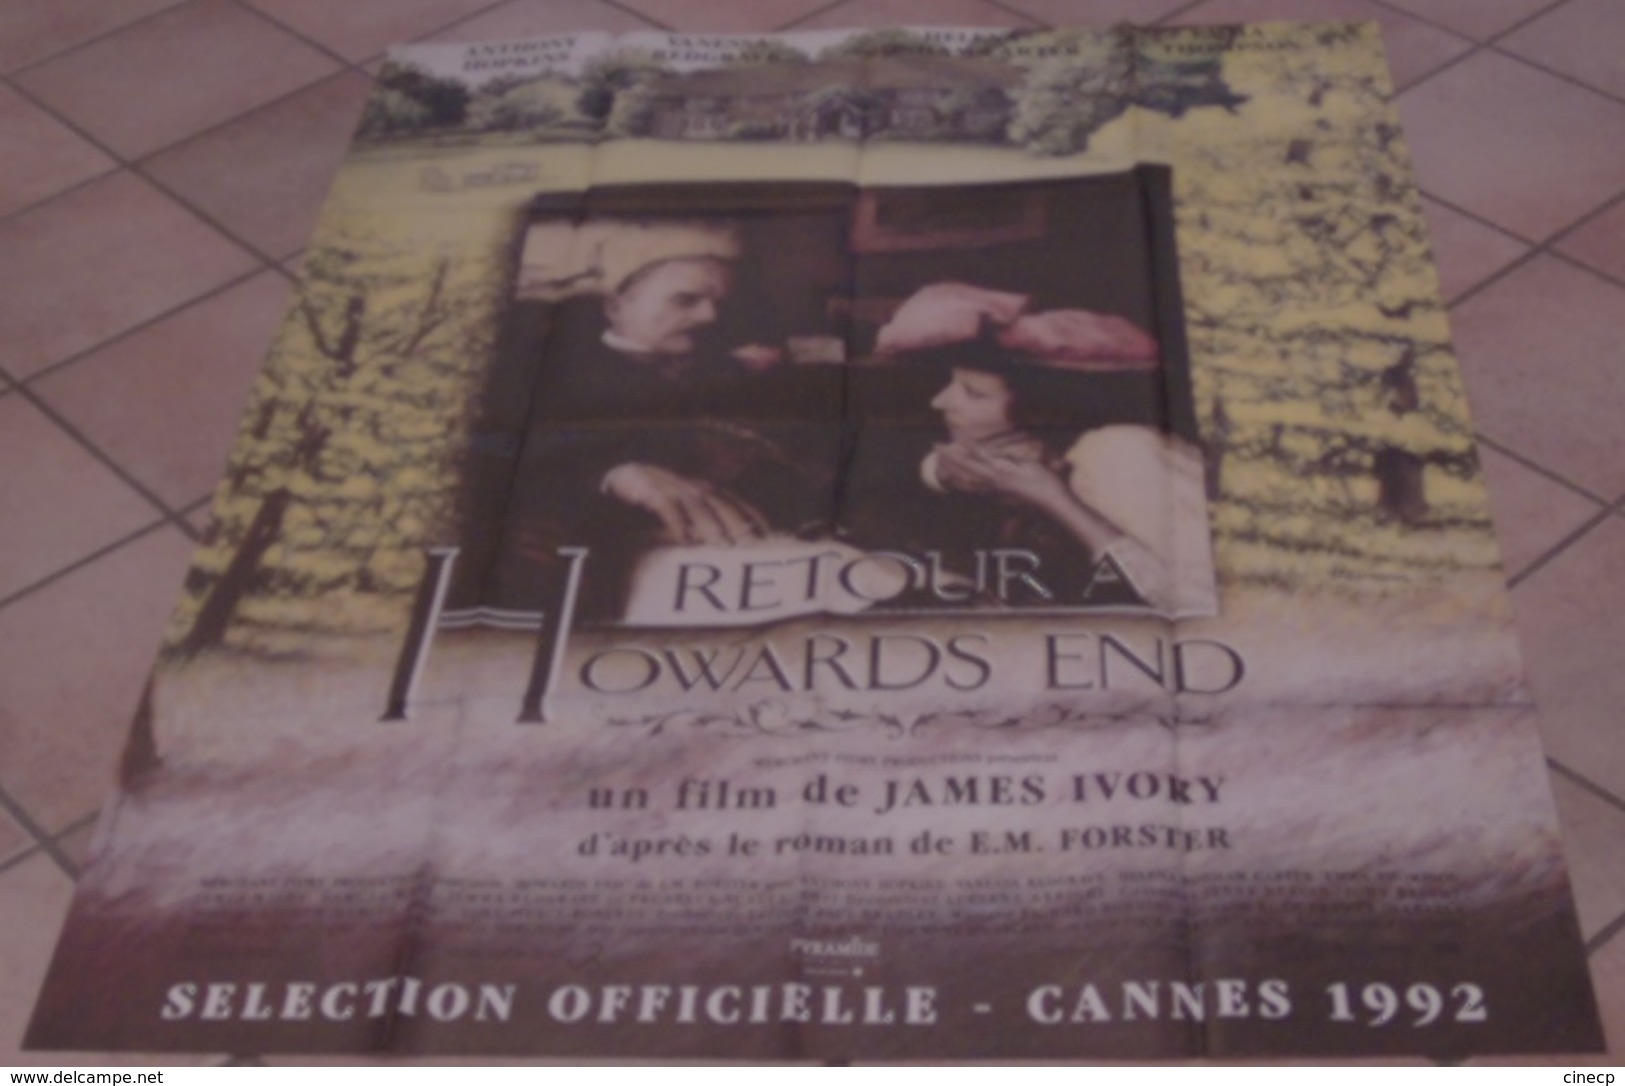 AFFICHE CINEMA ORIGINALE FILM RETOUR A HOWARDS END IVORY HOPKINS REDGRAVE THOMPSON 1992 TBE TB DESSIN THURMAN - Posters